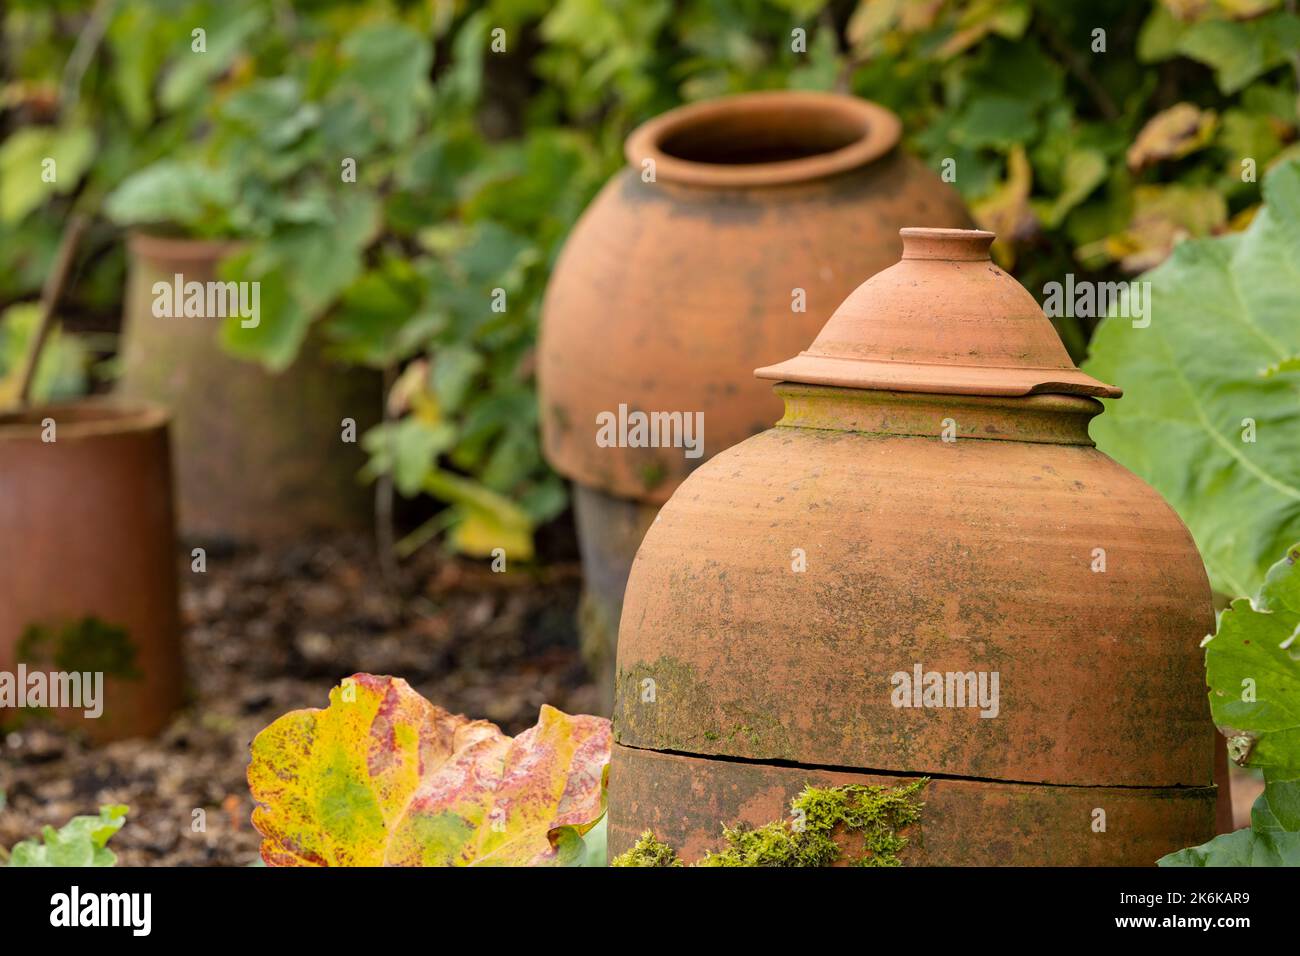 Tradizionali vasi di terracotta forzati in giardino di rabarbaro Foto Stock